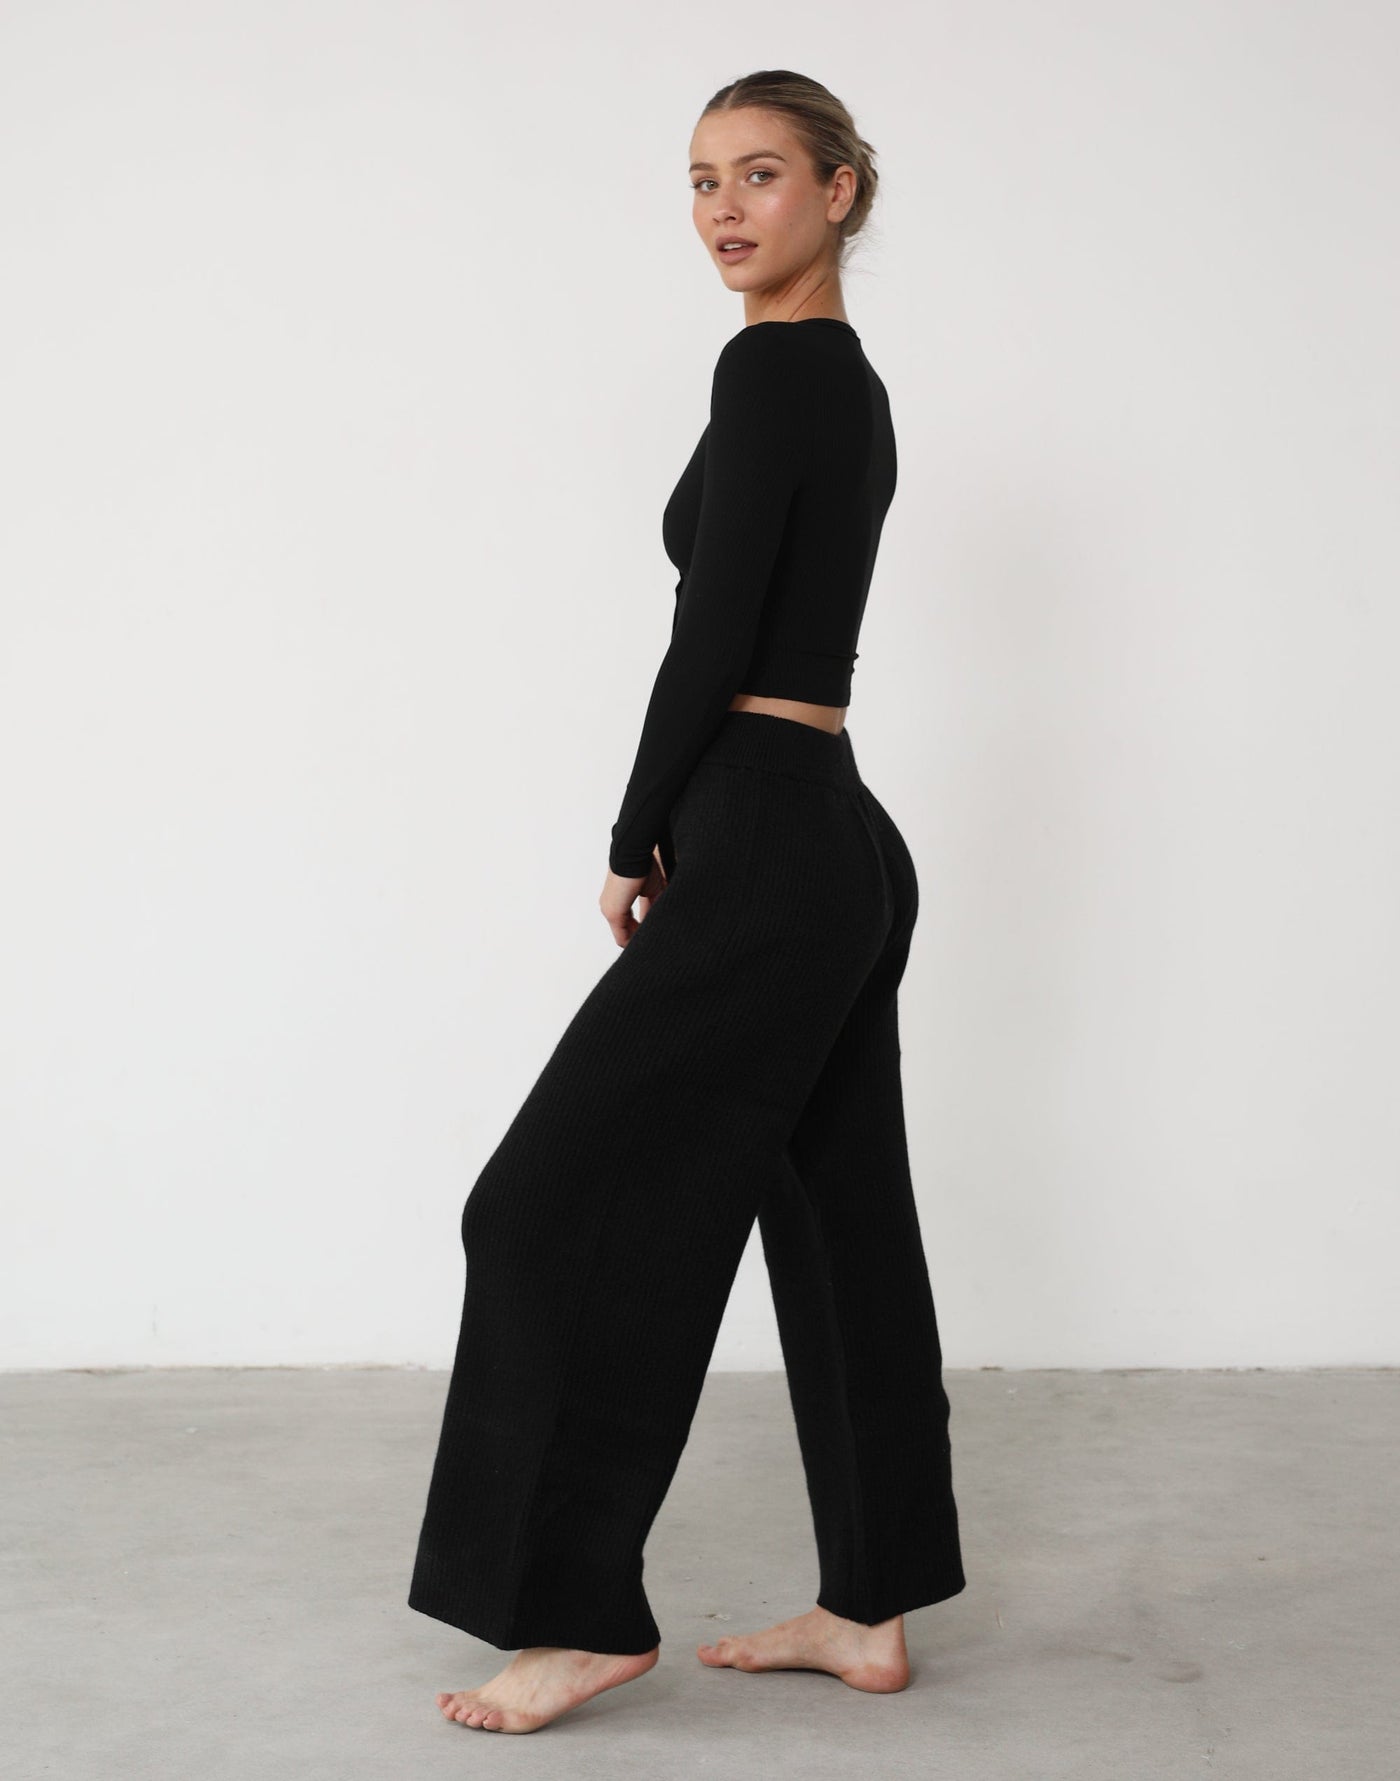 Tavinia Knit Pants (Black) - Ribbed High Waisted Wide Leg Knit Pant - Women's Pants - Charcoal Clothing